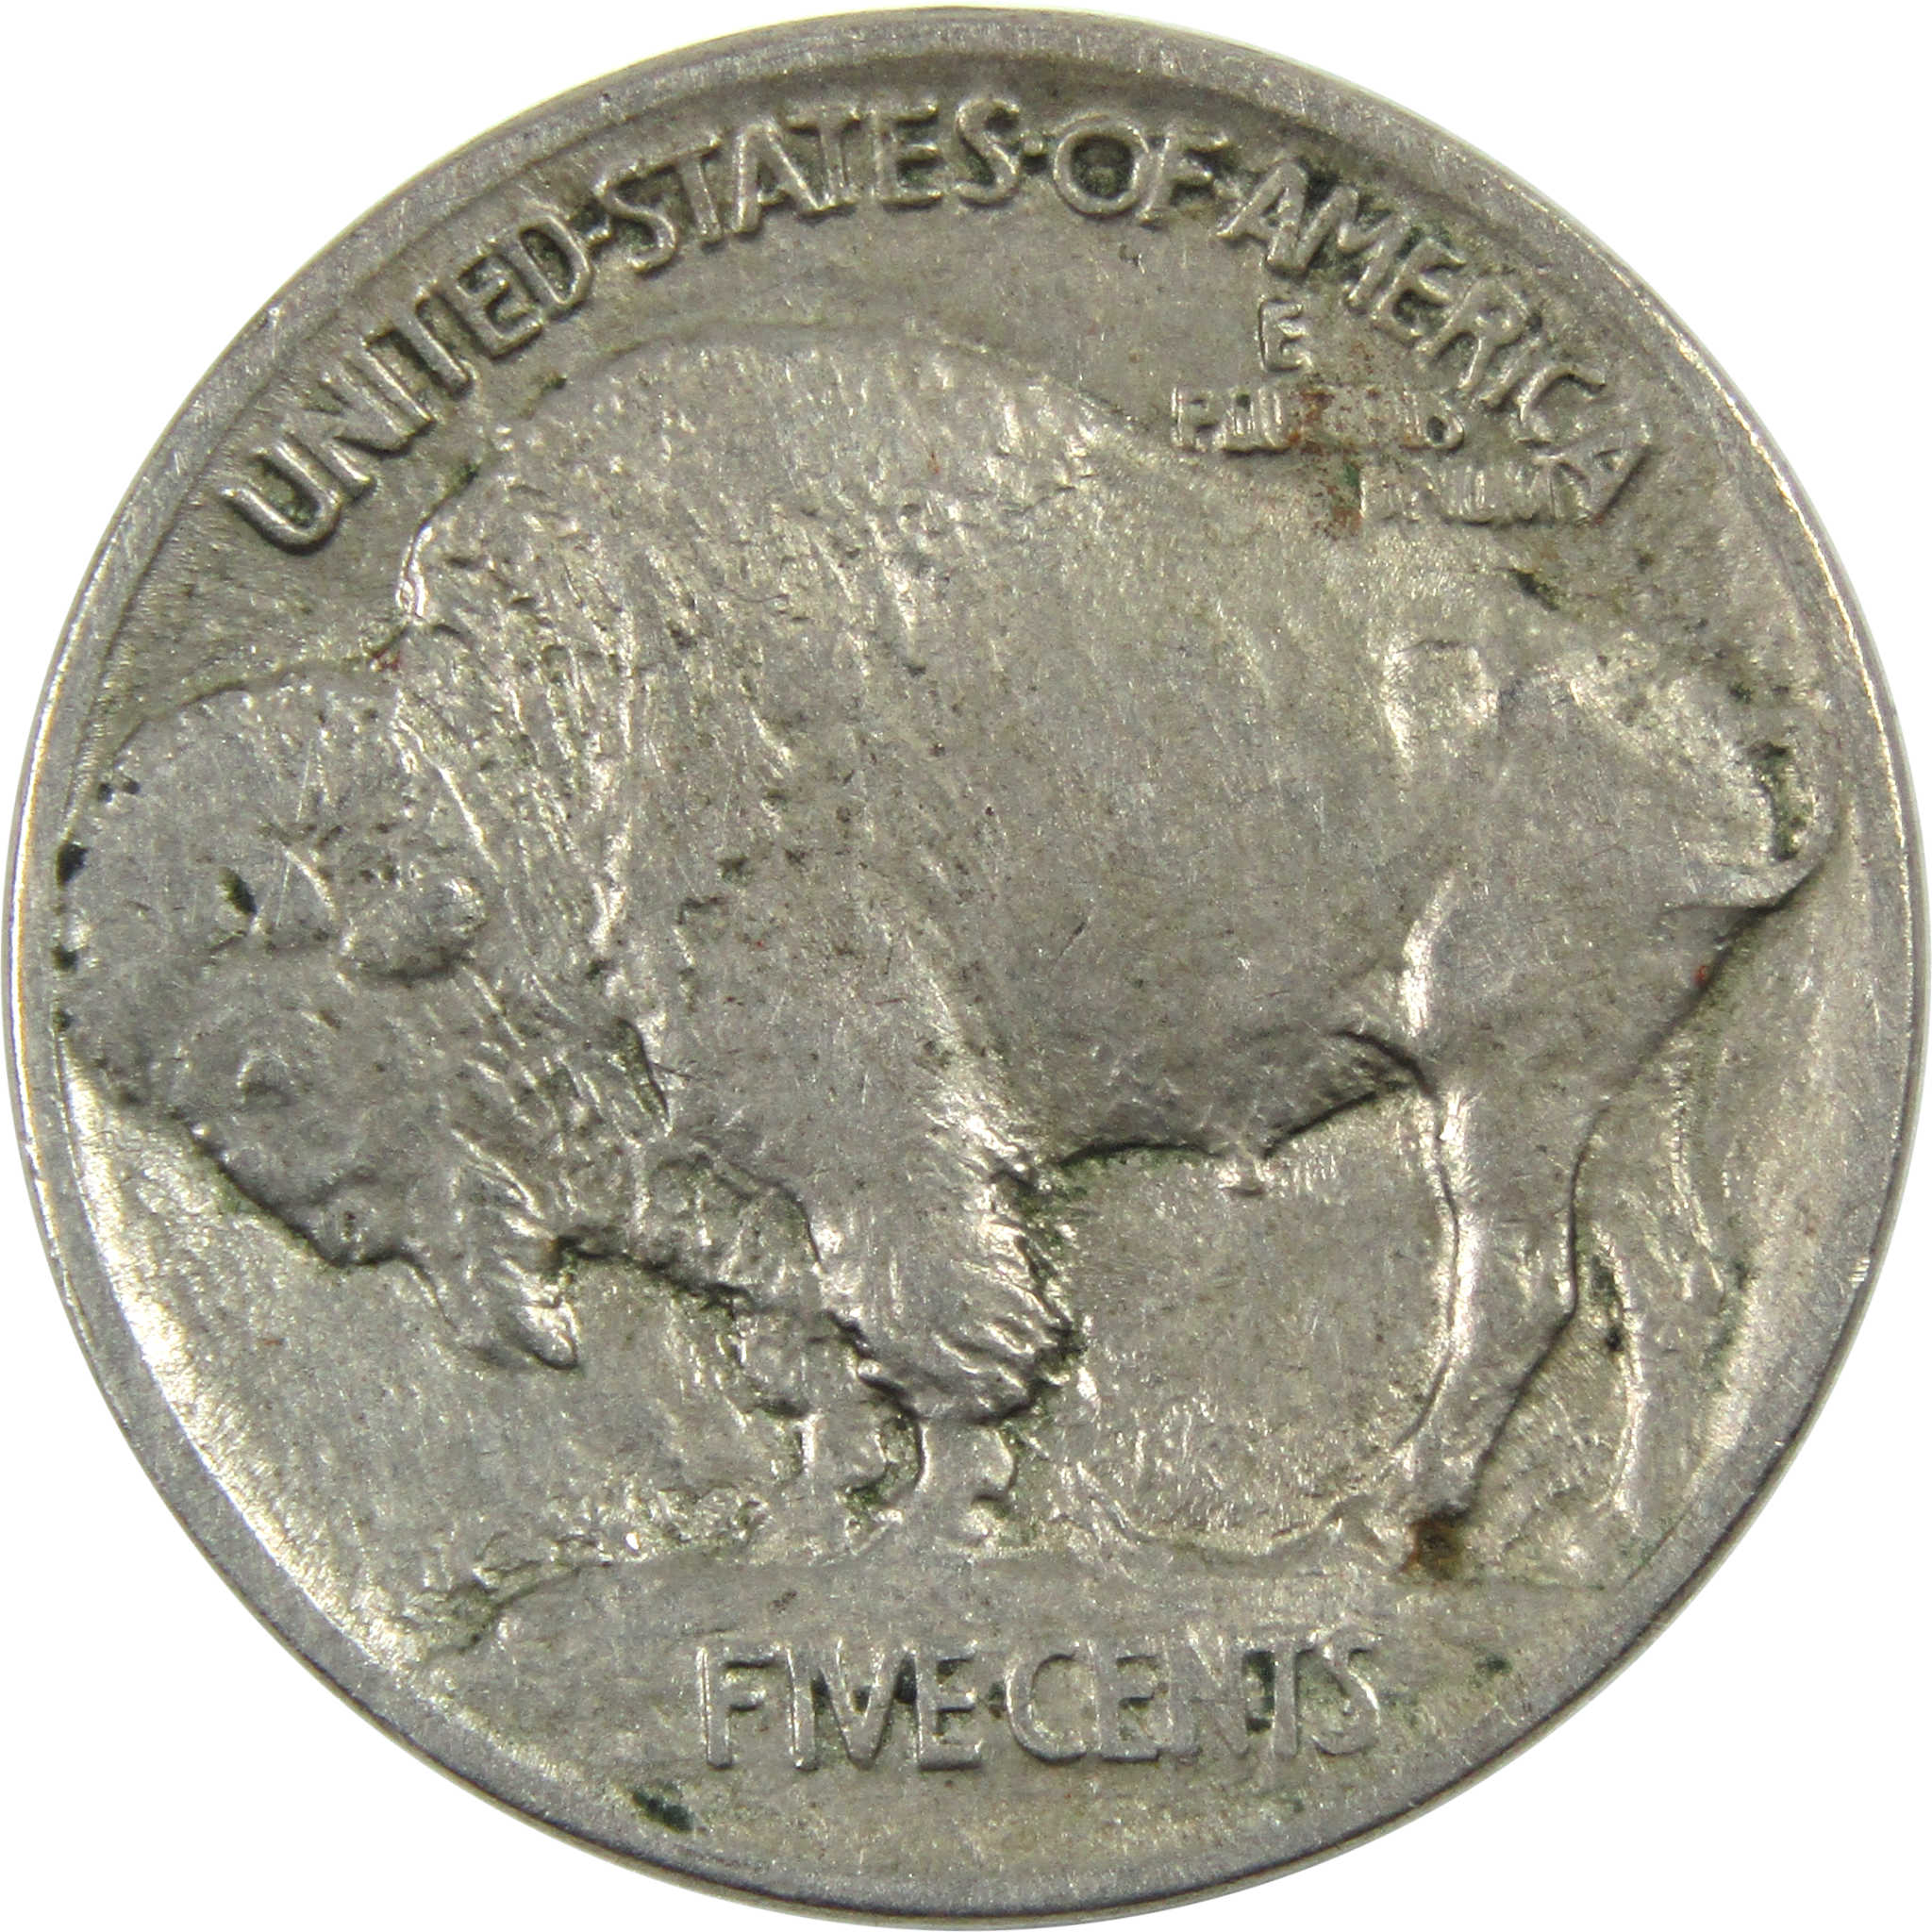 1913 Type 1 Indian Head Buffalo Nickel VF Very Fine 5c Coin SKU:I12991